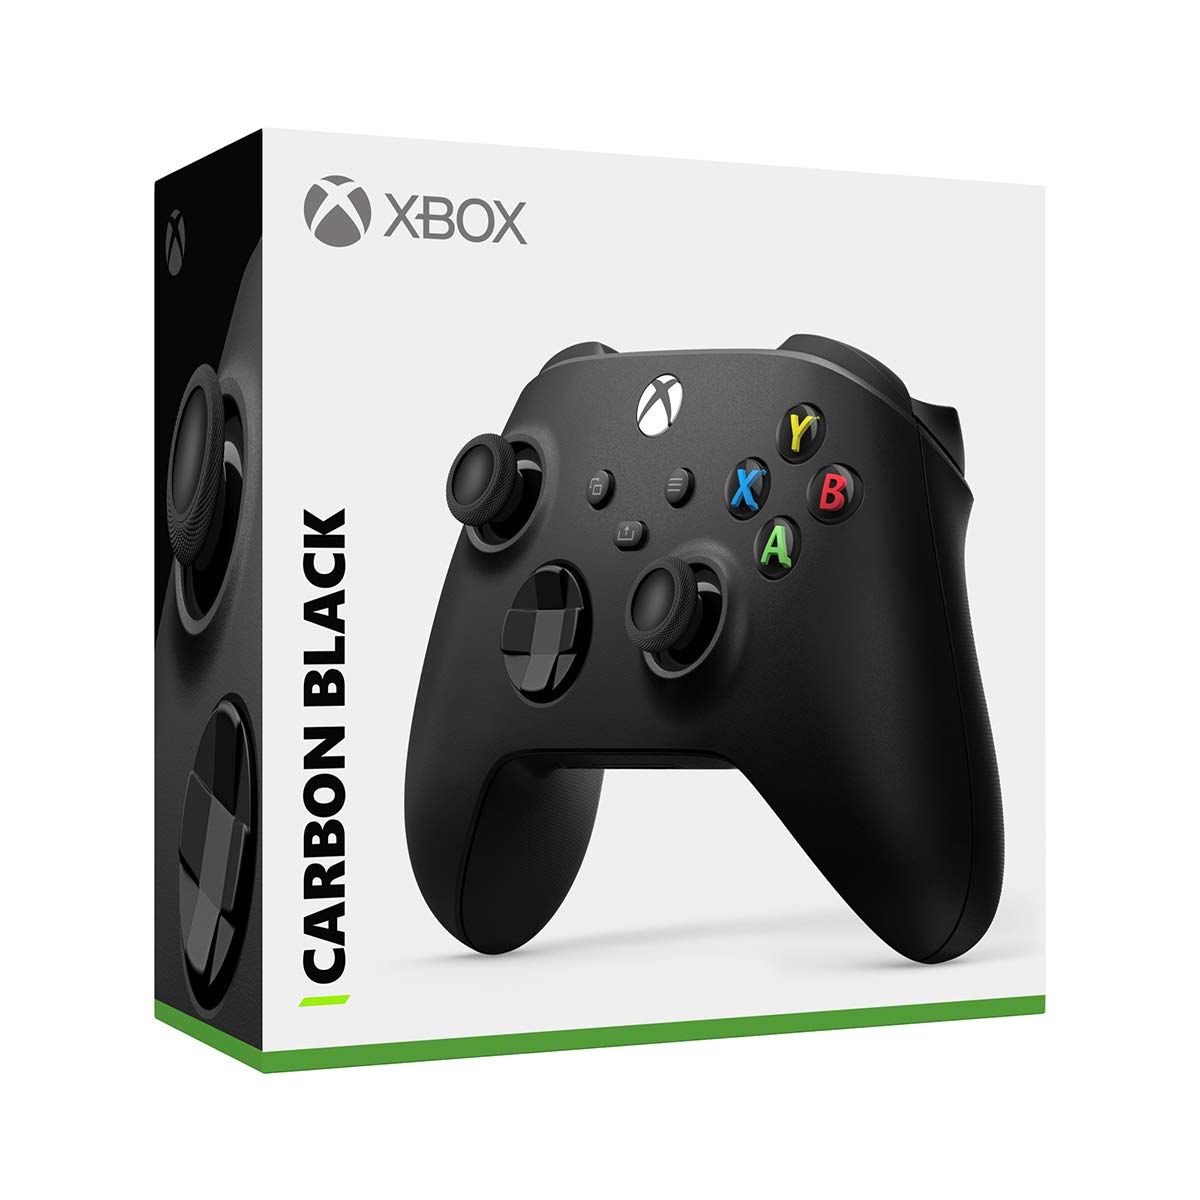 Xbox Wireless Controller shiping box